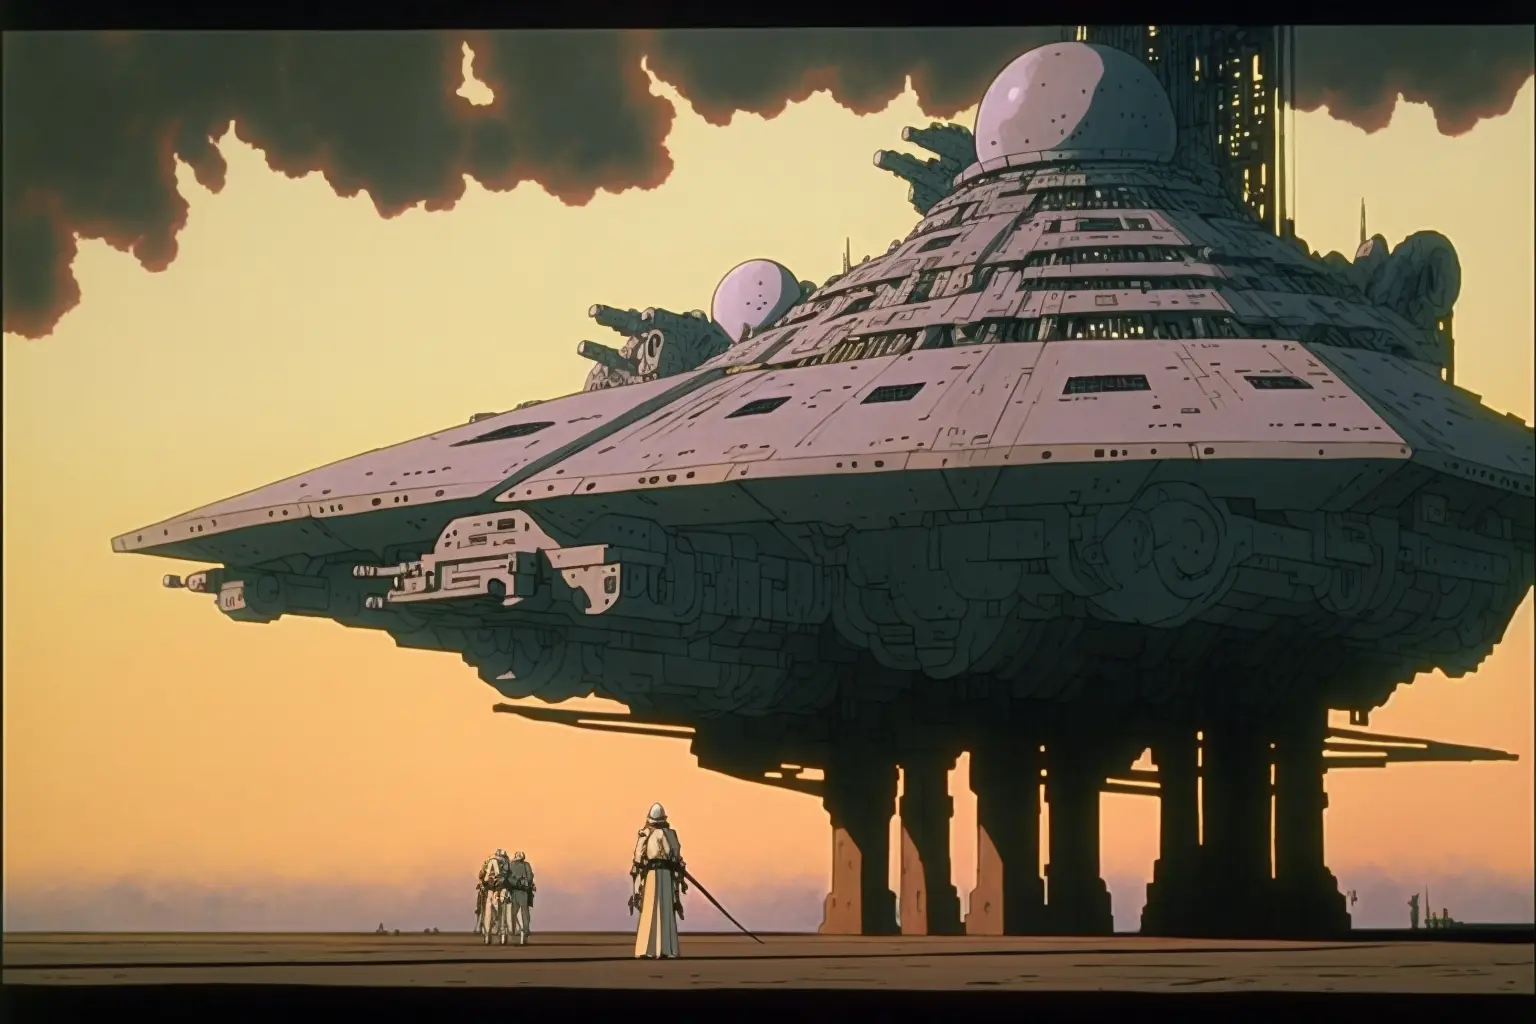 DVD screengrab from studio ghibli movie, star wars imperial star destroyer, directedd by Hayao Miyazaki, retro anime